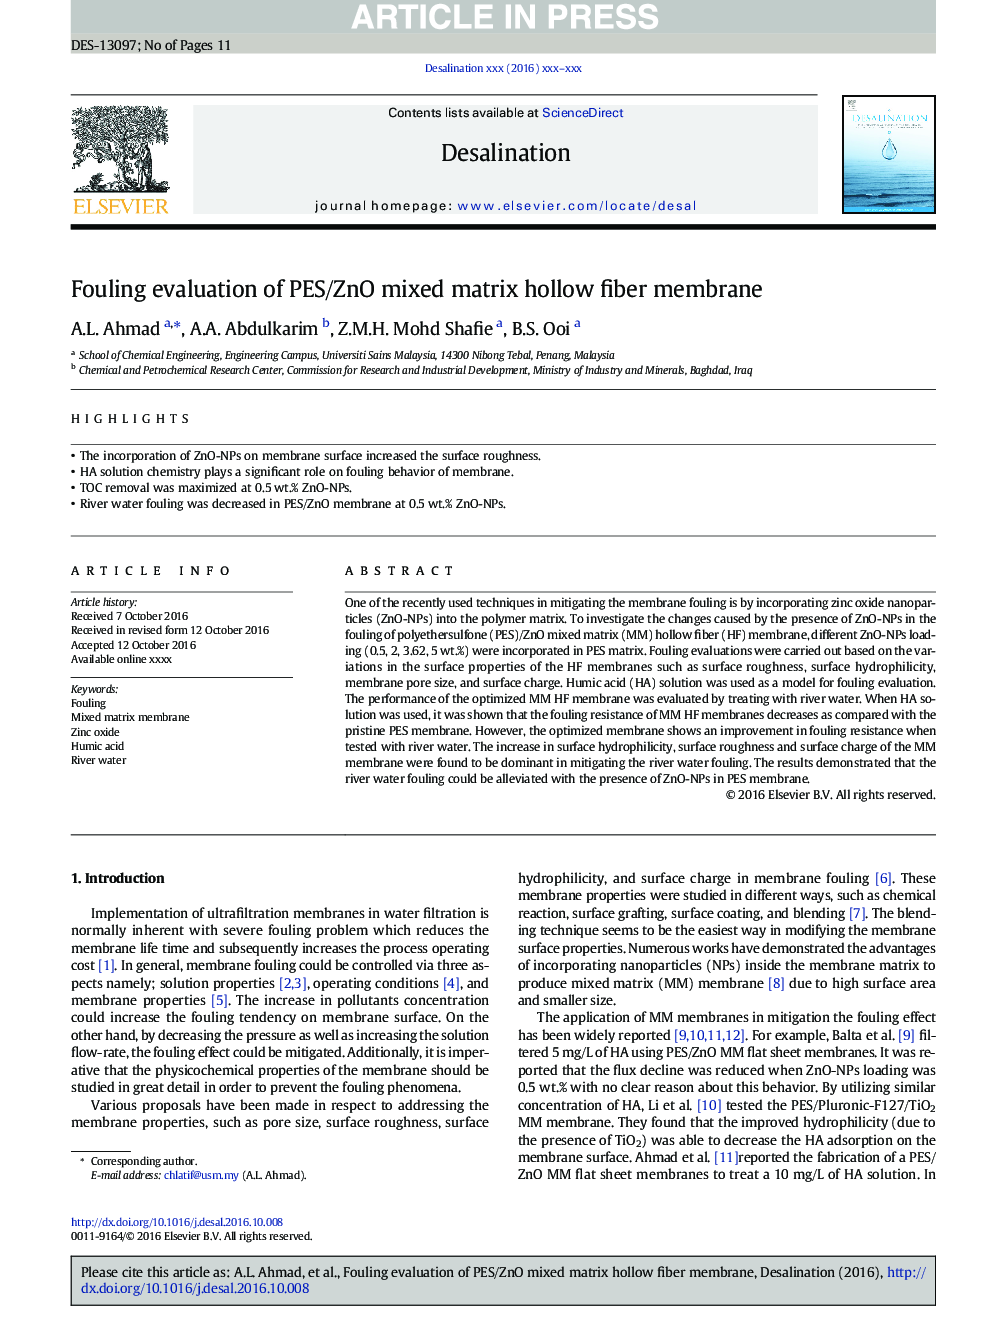 Fouling evaluation of PES/ZnO mixed matrix hollow fiber membrane